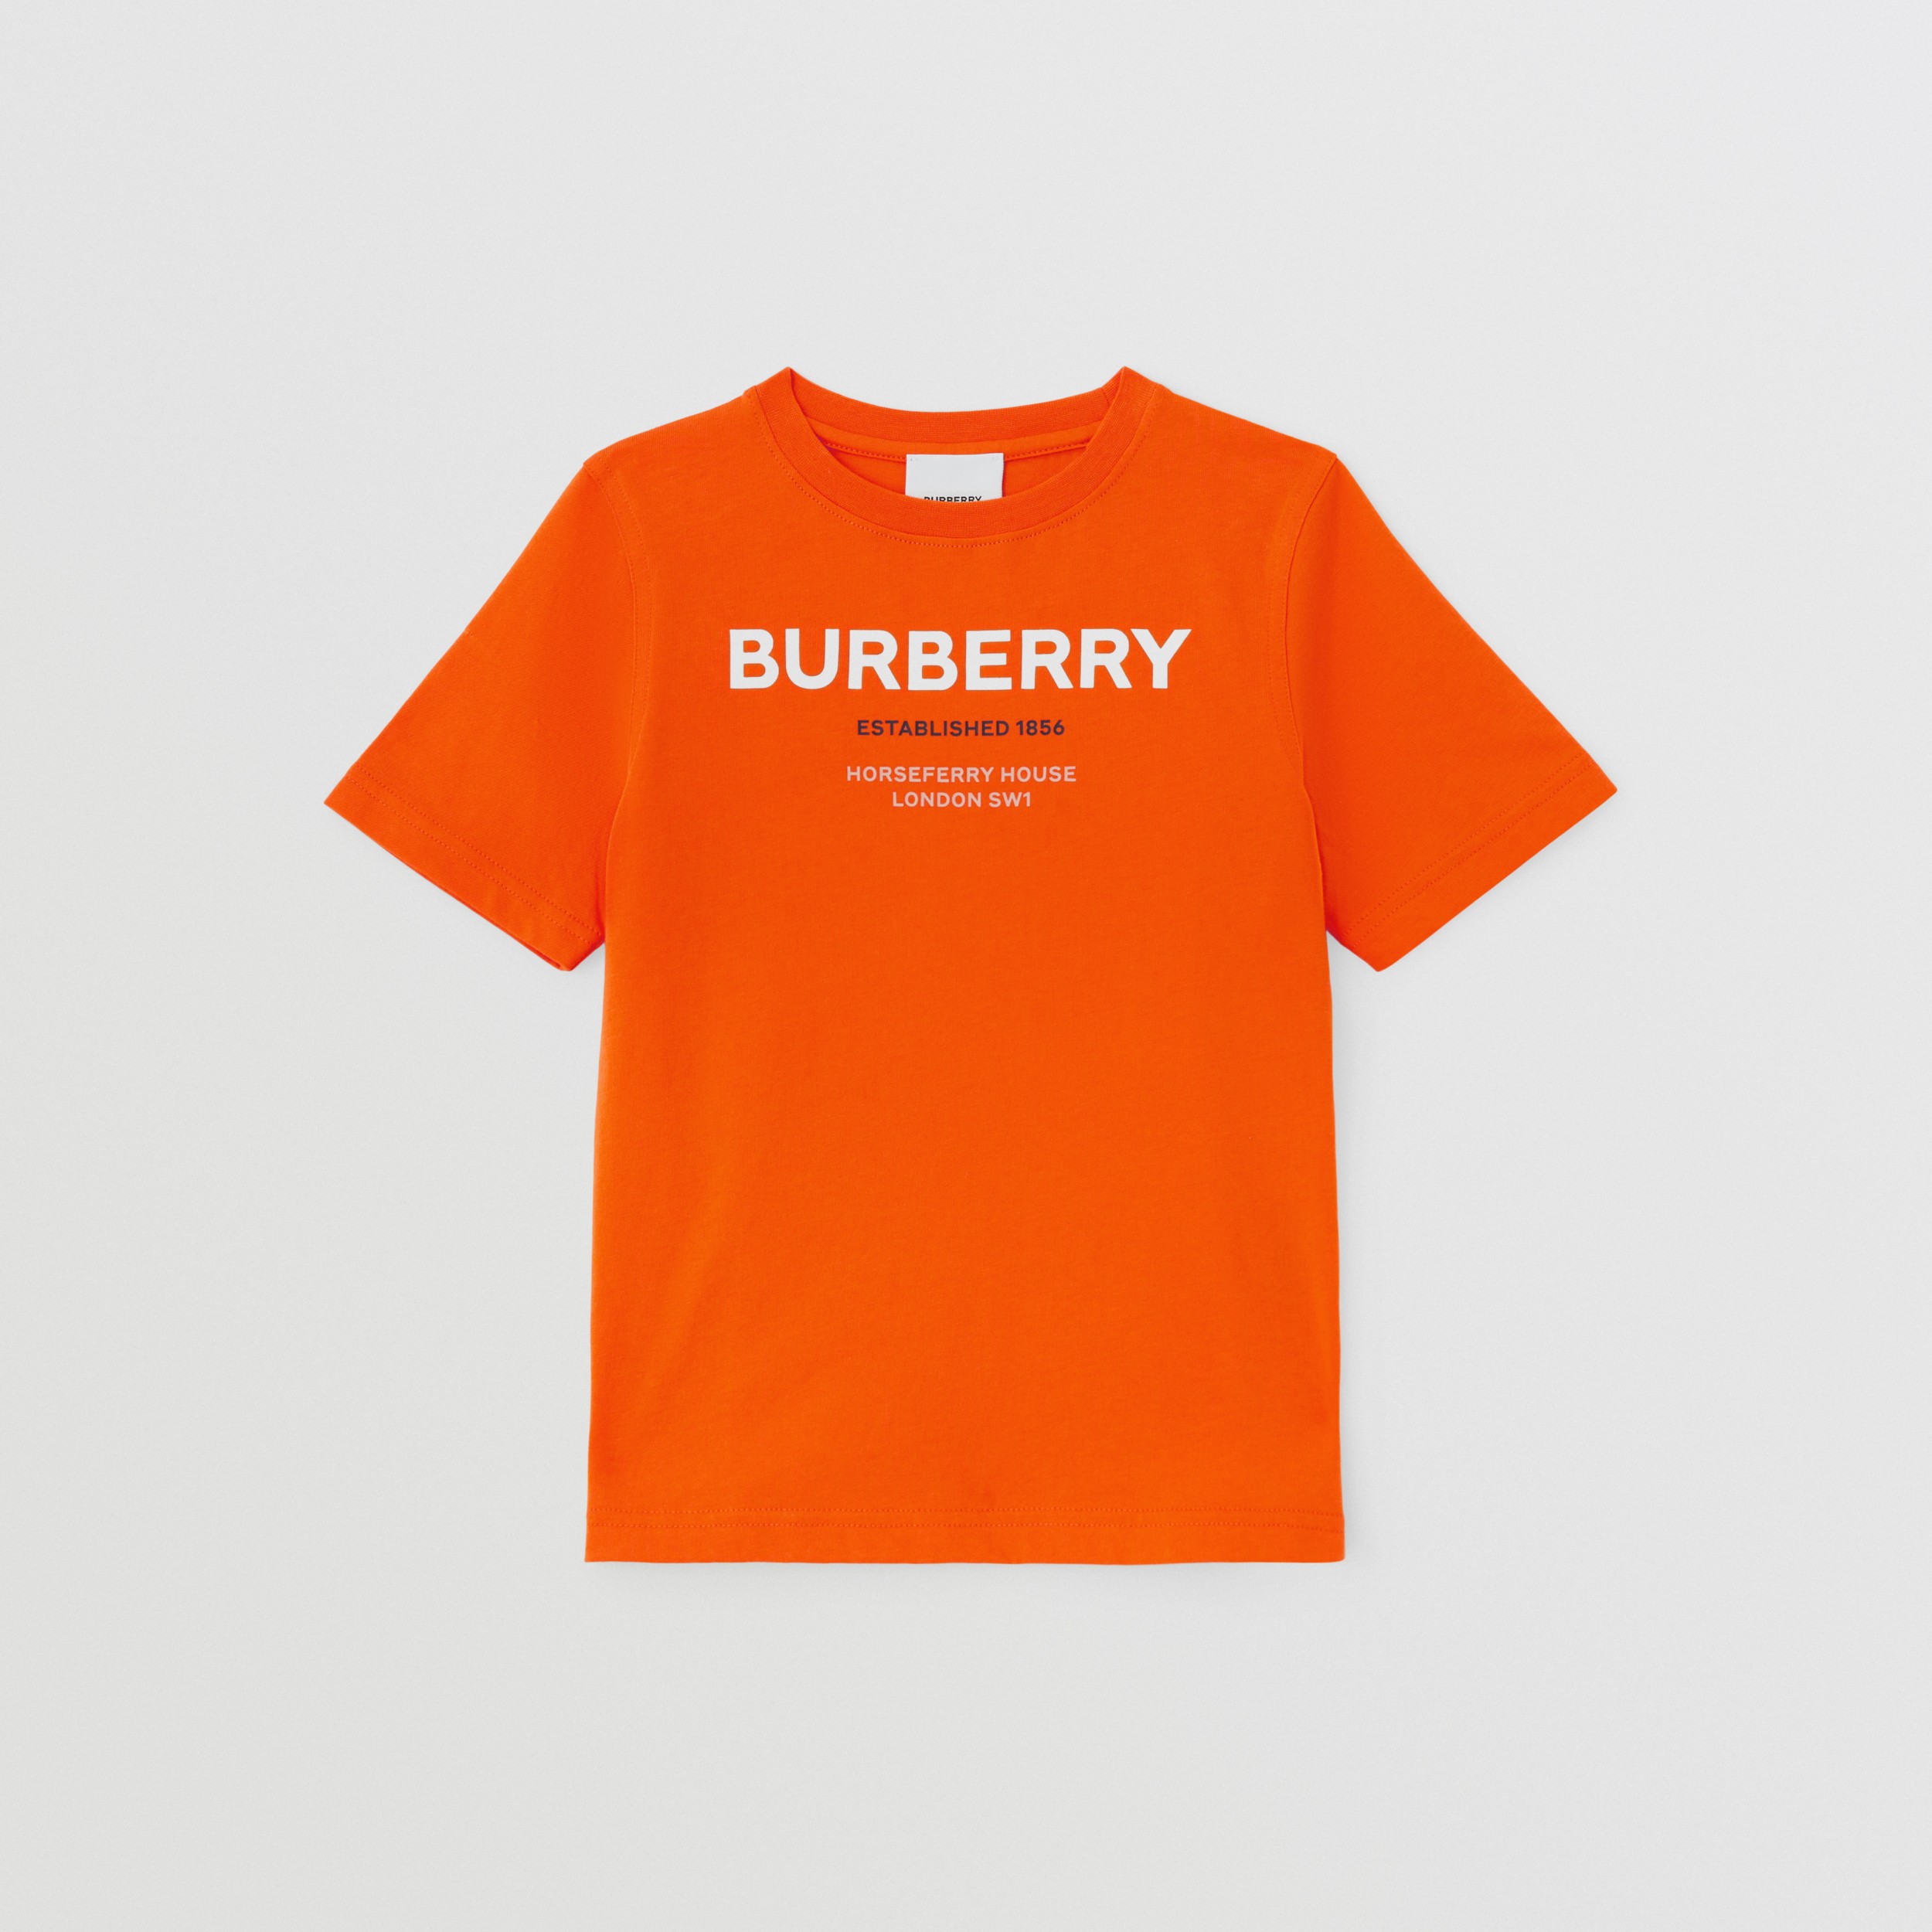 Arriba 77+ imagen burberry orange shirt